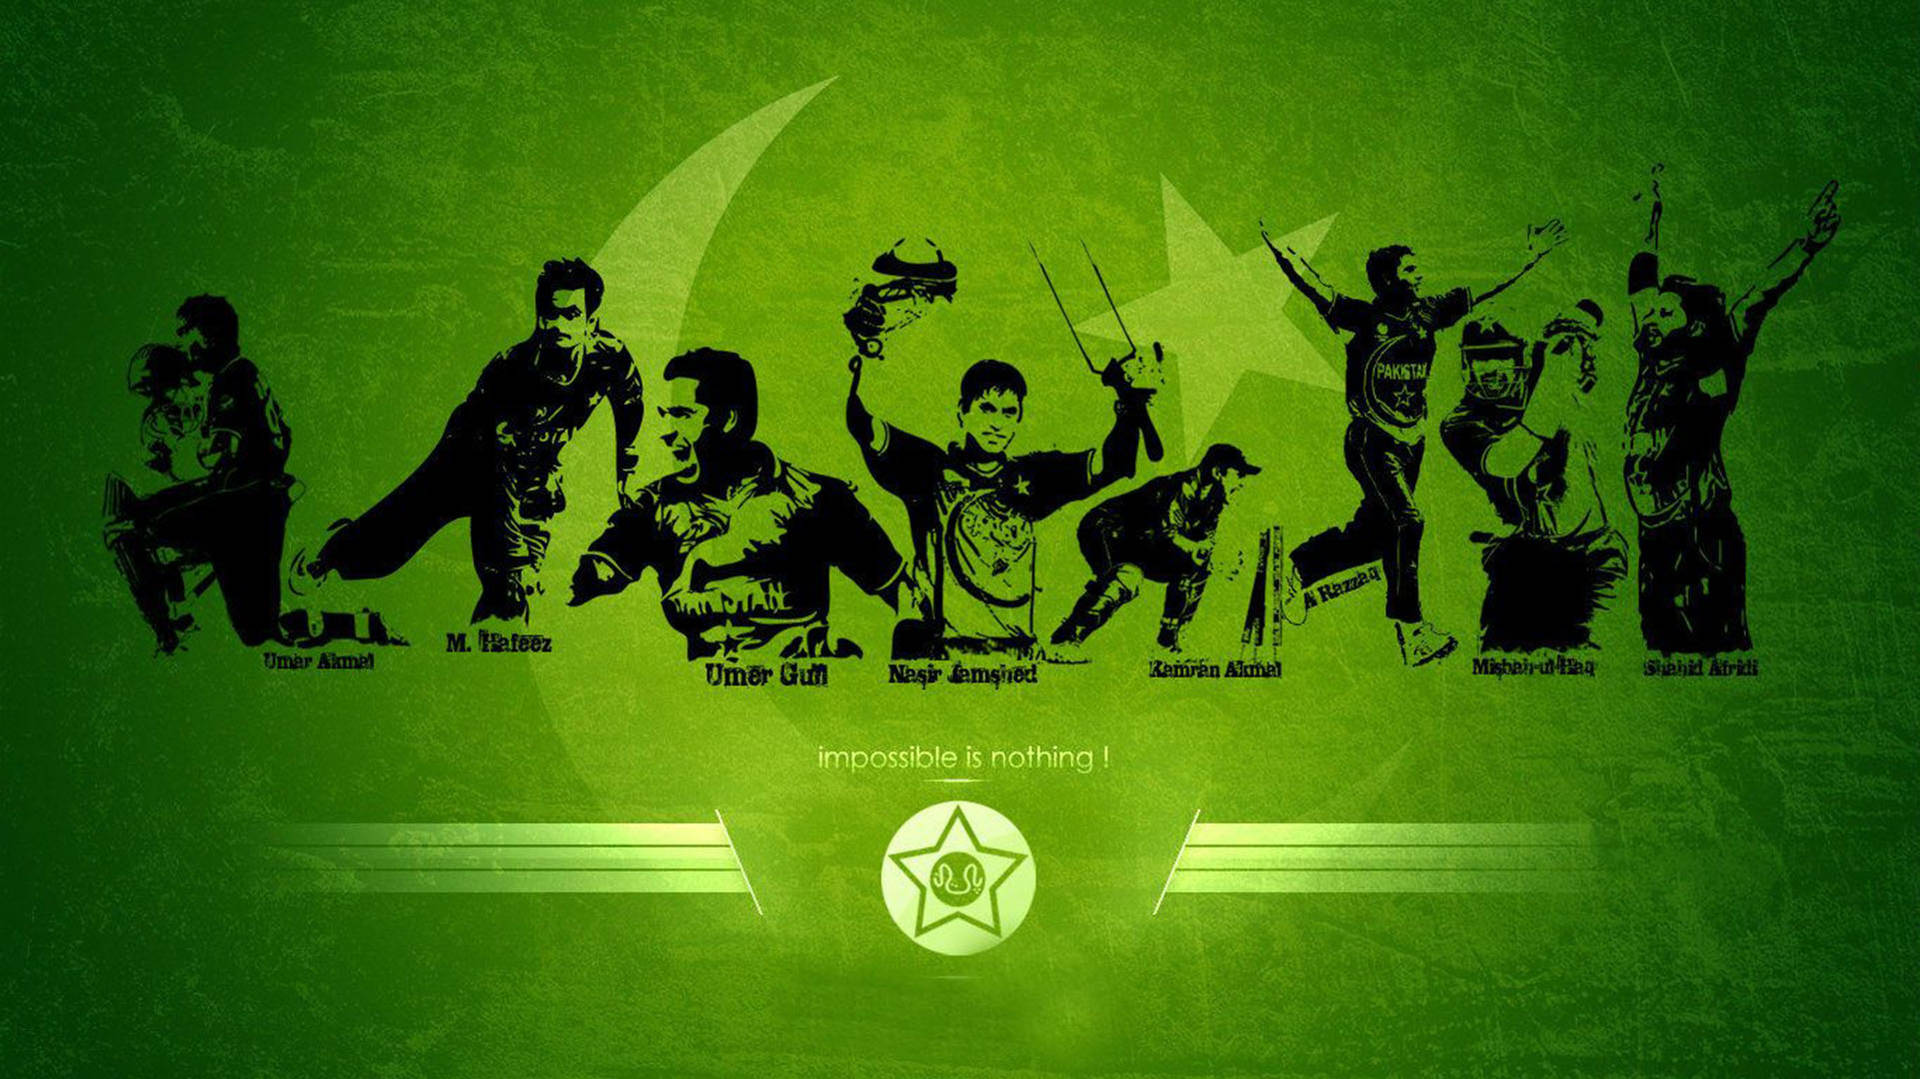 Free Pakistan Cricket Wallpaper Downloads, Pakistan Cricket Wallpaper for FREE